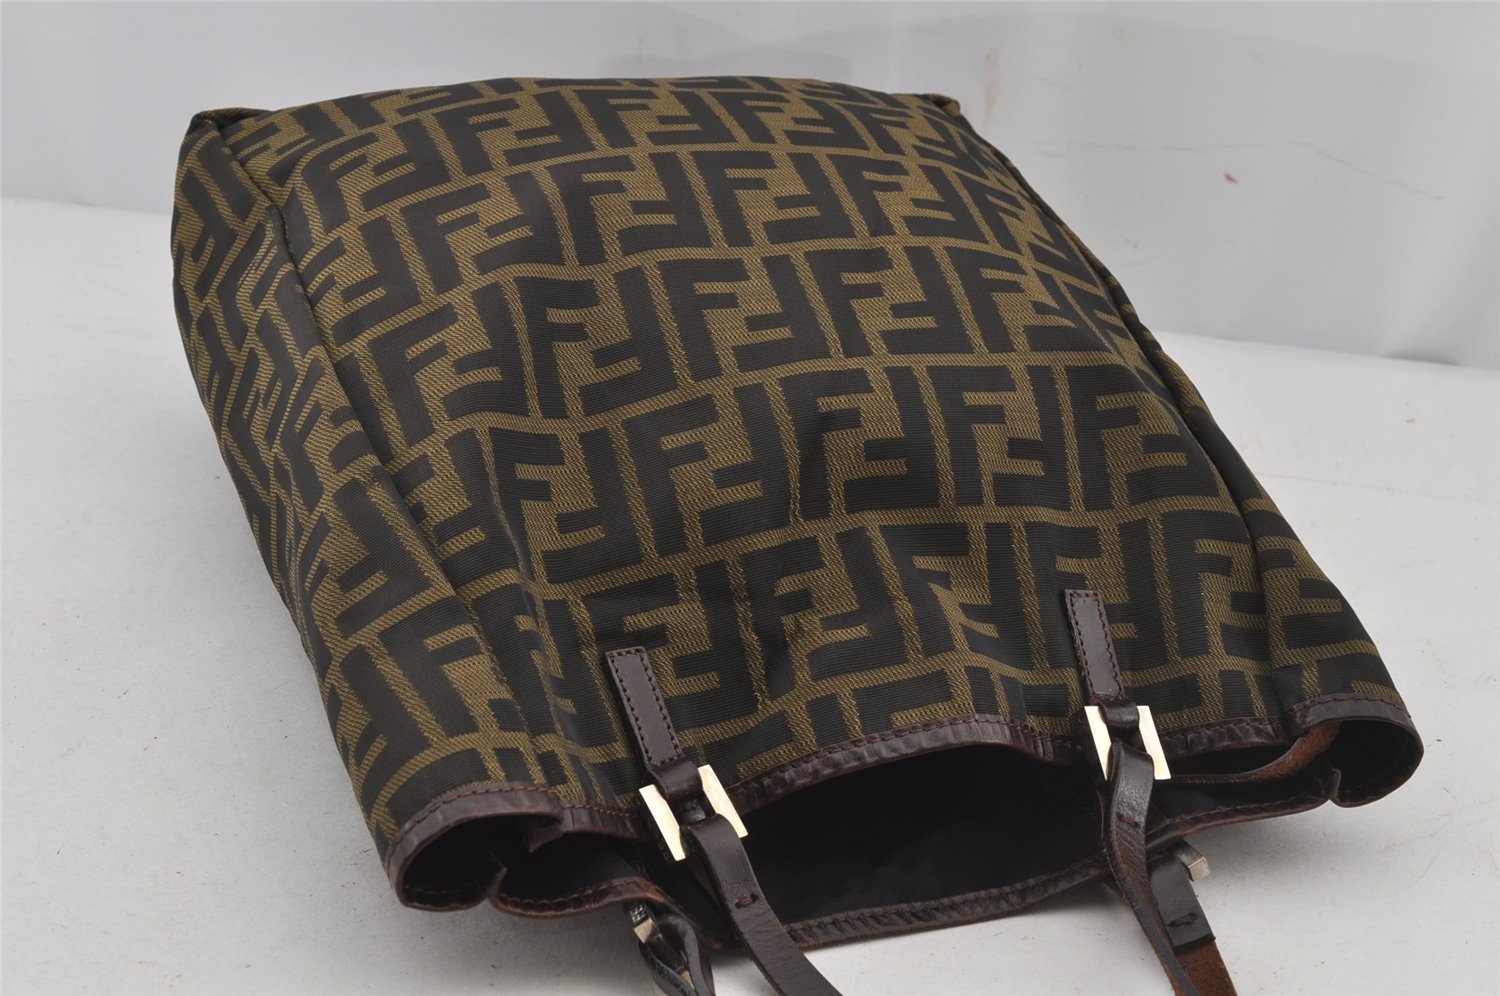 Authentic FENDI Vintage Zucca Shoulder Tote Bag Nylon Leather Brown 6601J